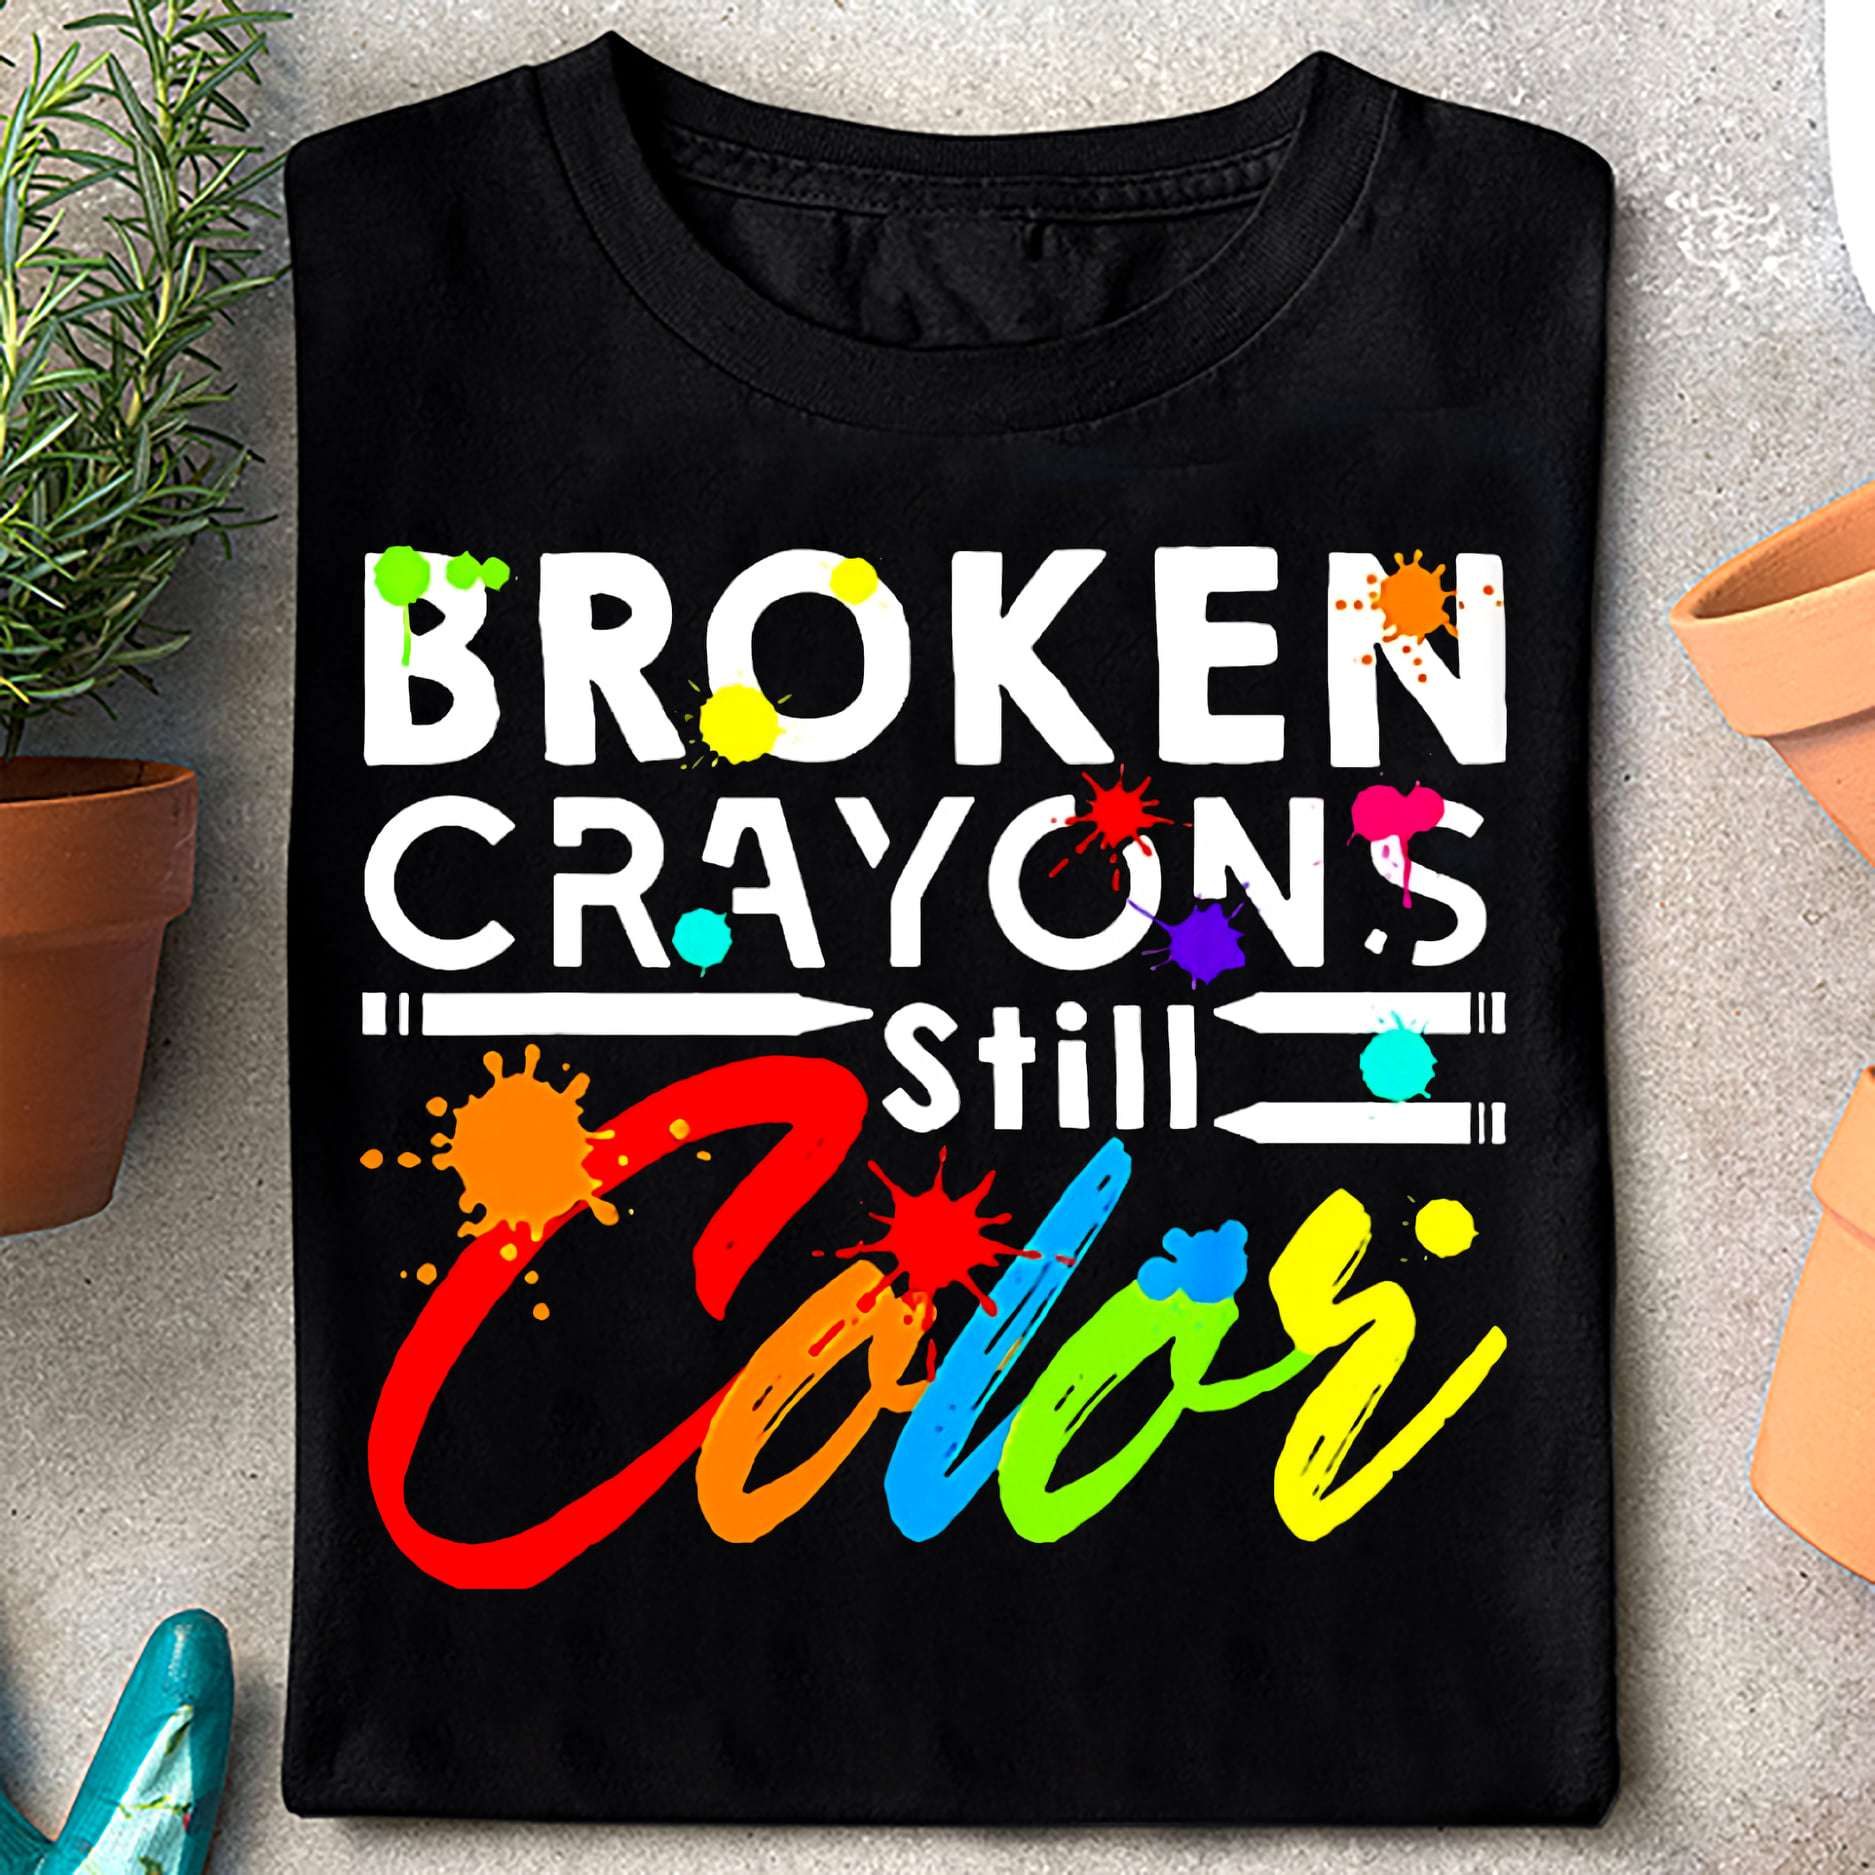 Broken crayons still color - Crayons make color, colorful crayons Shirt ...